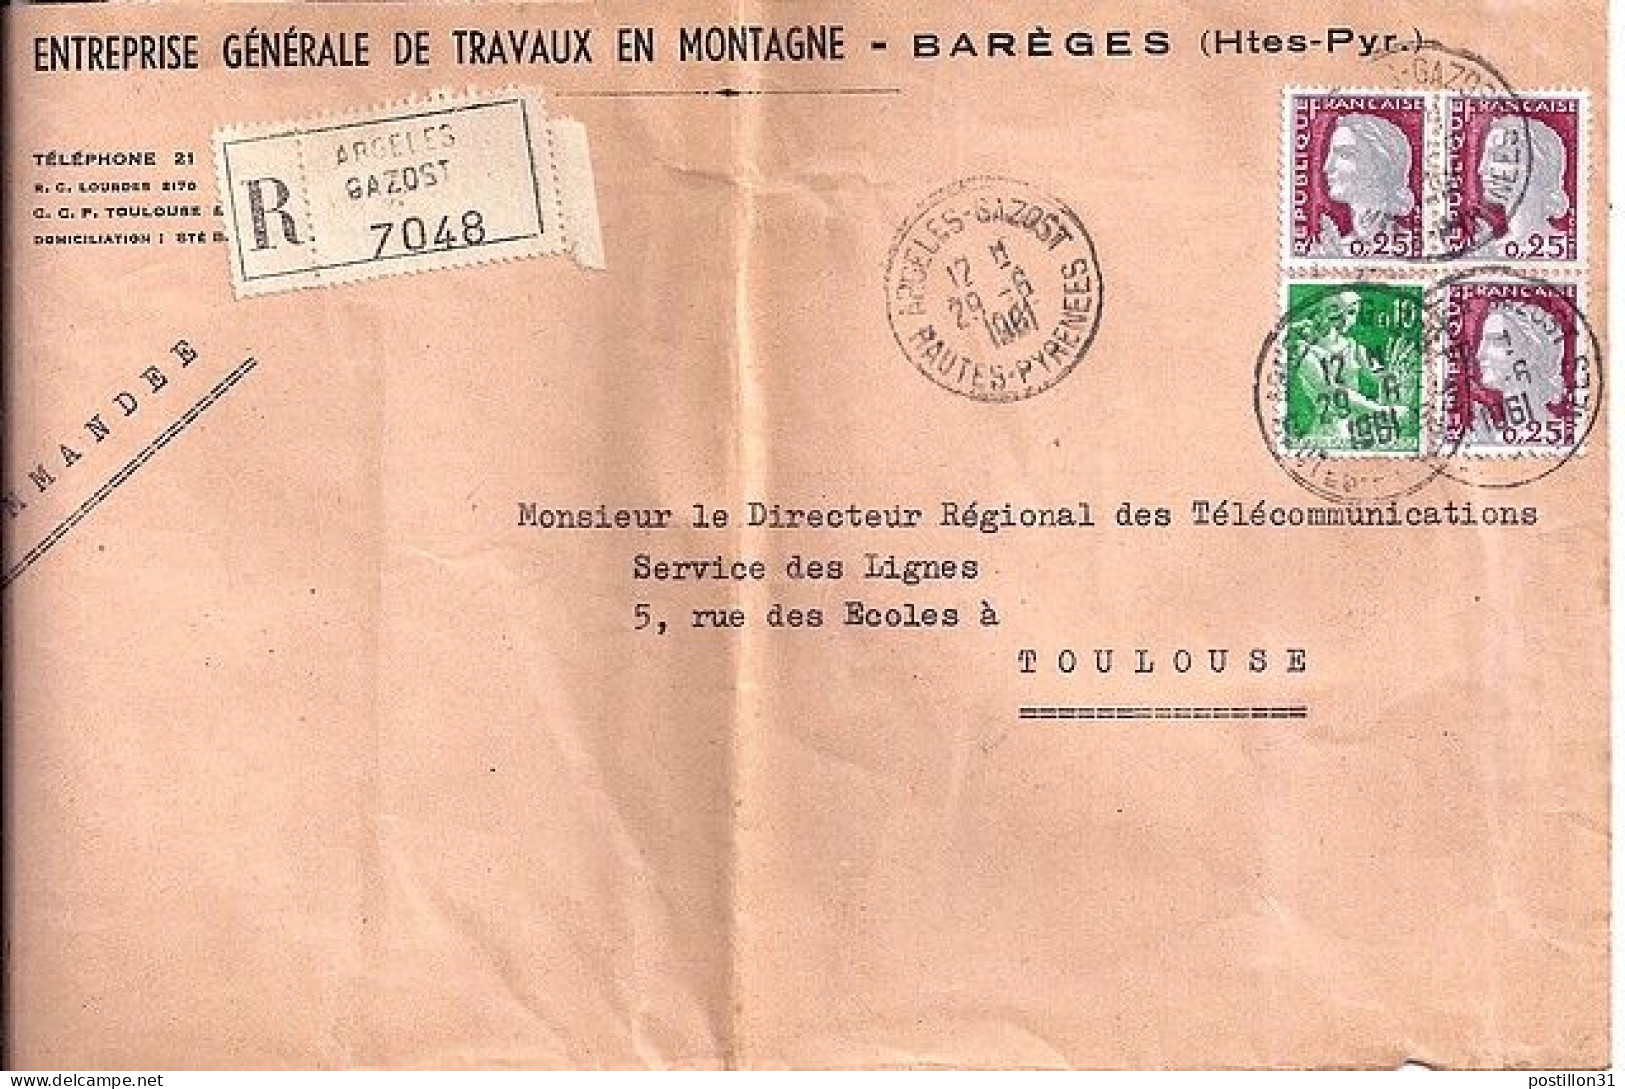 DECARIS N° 1263x3/1231 S/L.REC. DE ARGELES GAZOST / 29.6.61 - 1960 Marianne De Decaris